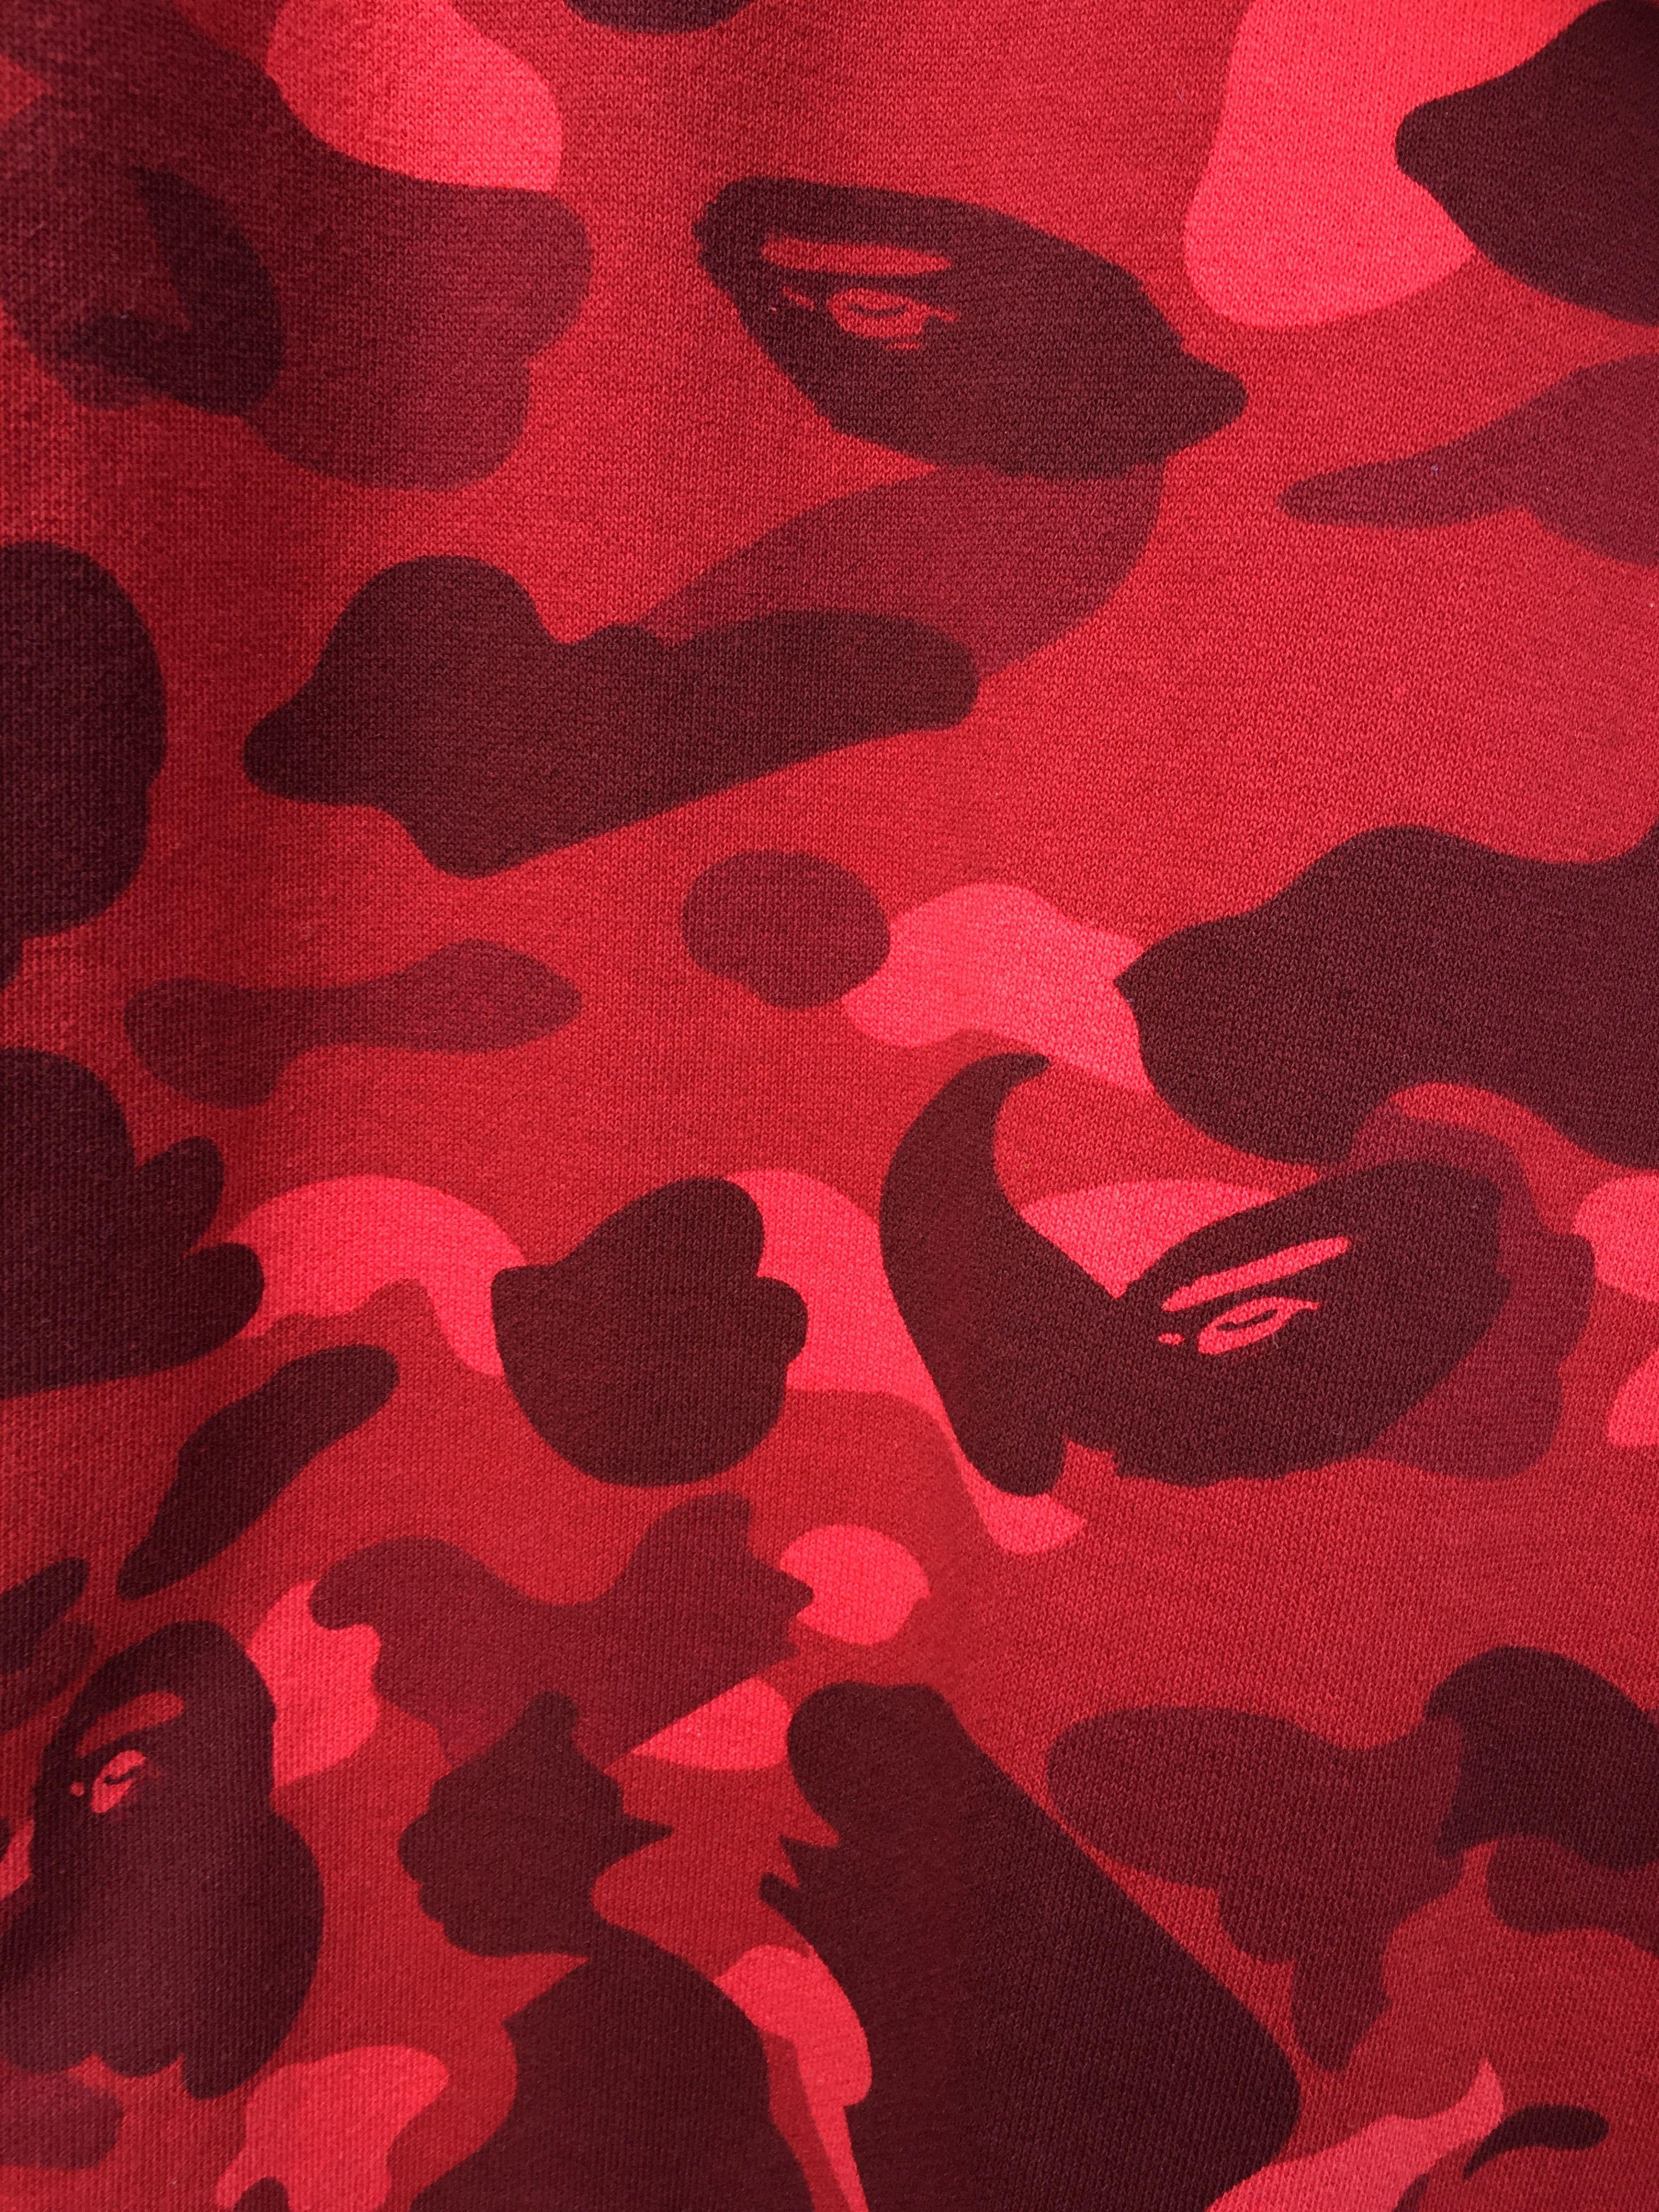 Red BAPE Camo Logo - A Bathing Ape Swarovski Red Camo Hooded Full Zip Sweatshirt Size XL